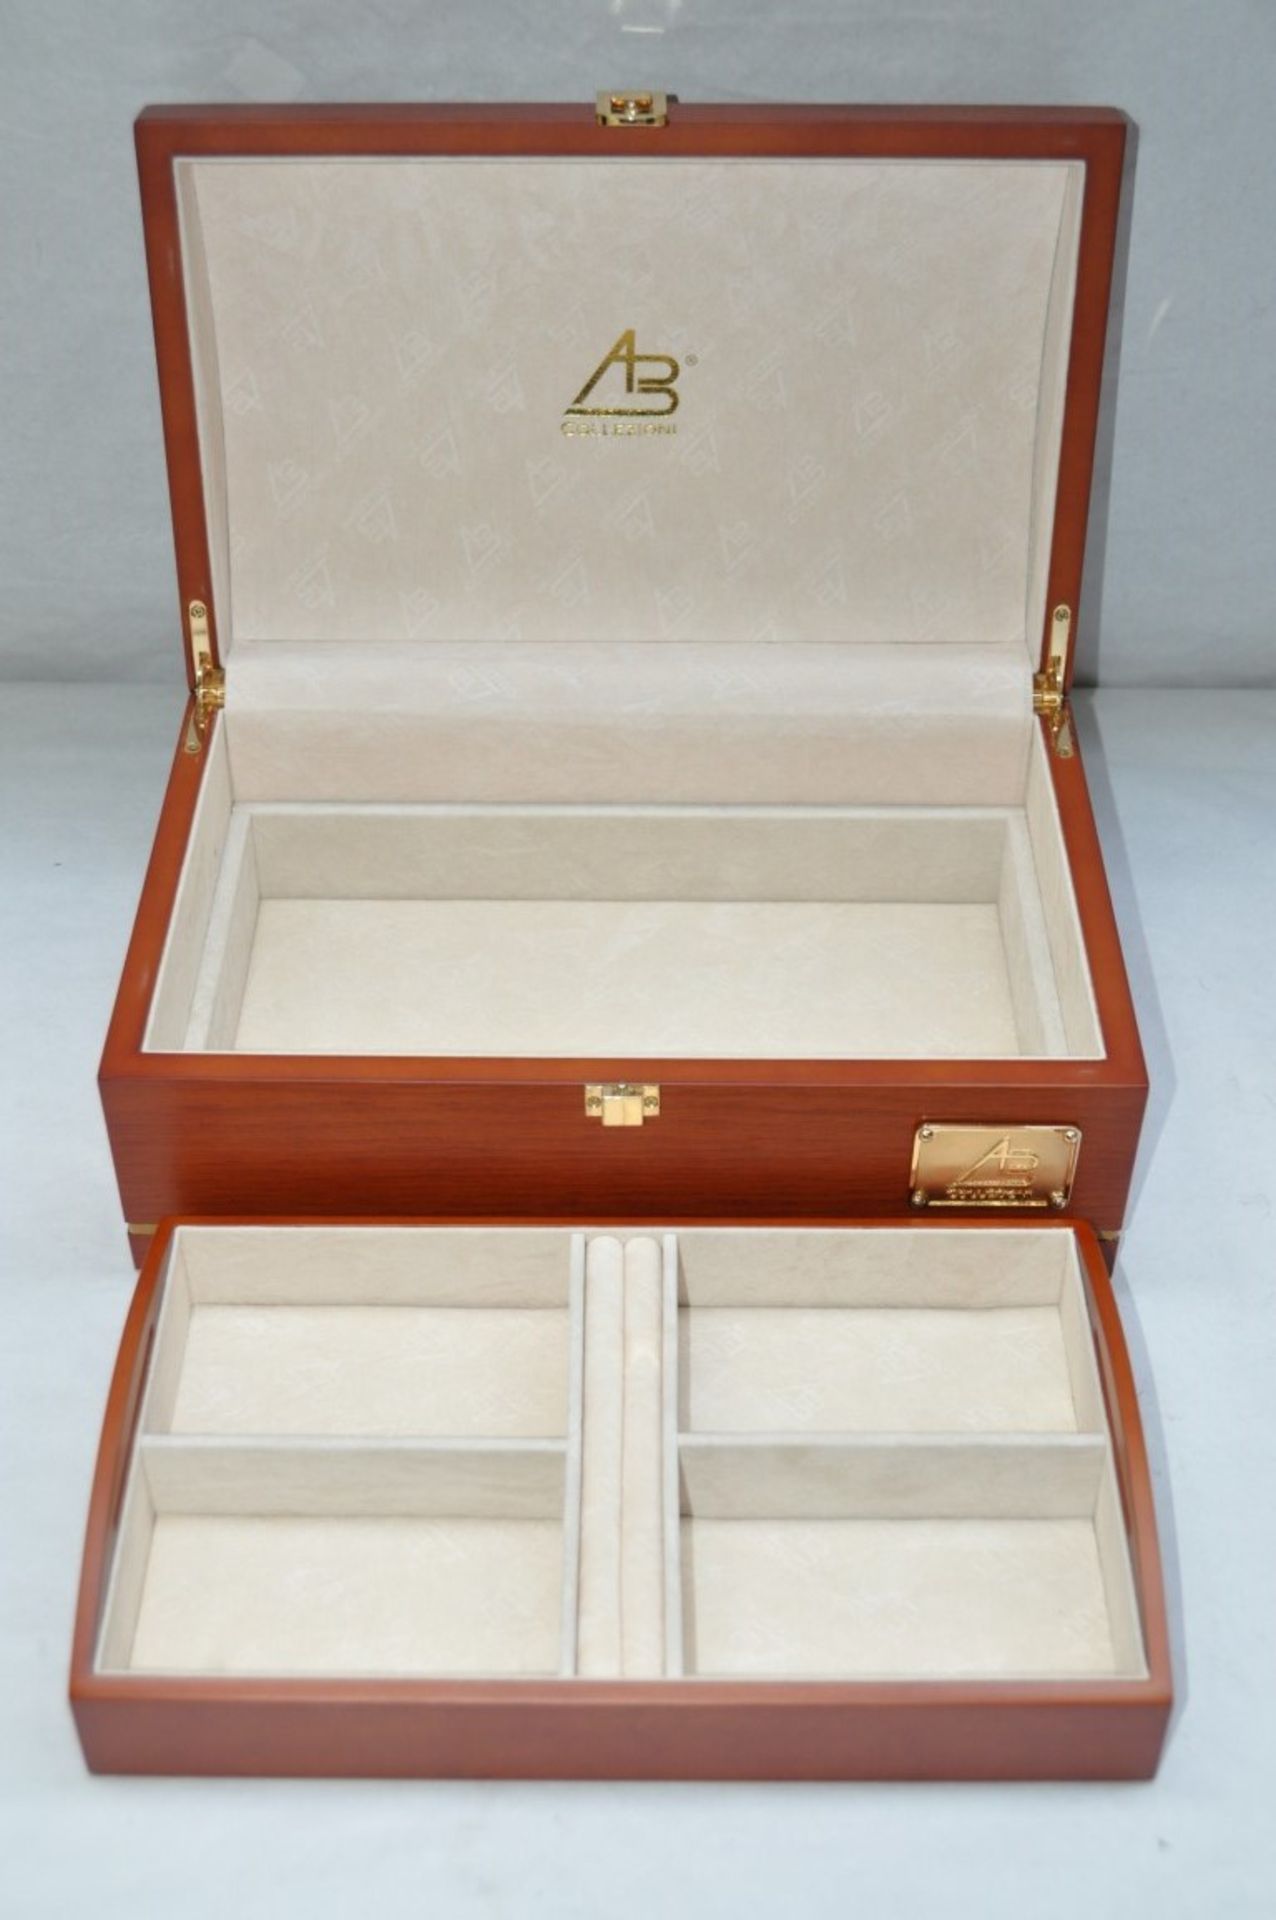 1 x "AB Collezioni" Italian Genuine Leather-Topped Luxury Jewellery Box (WC119W) - Ref LT071 – - Image 5 of 8